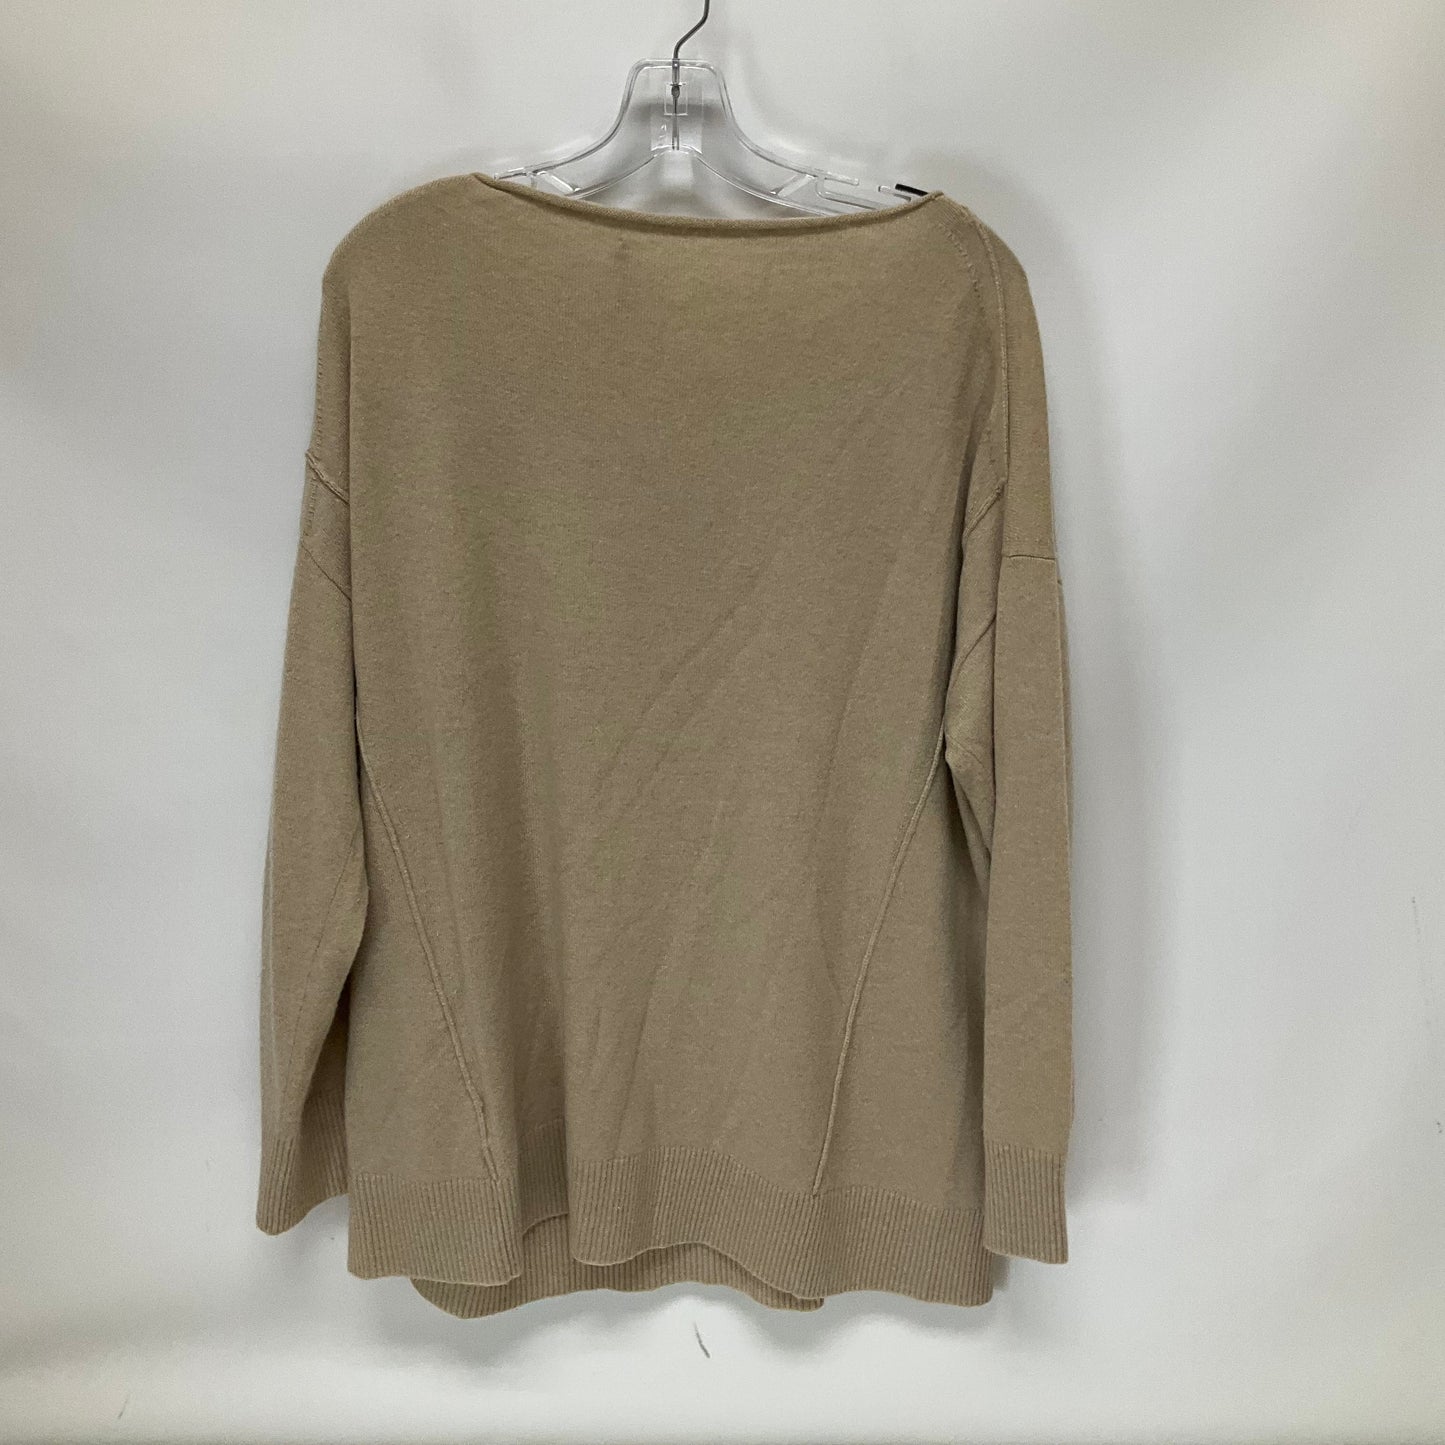 Tan Sweater Lafayette 148, Size L